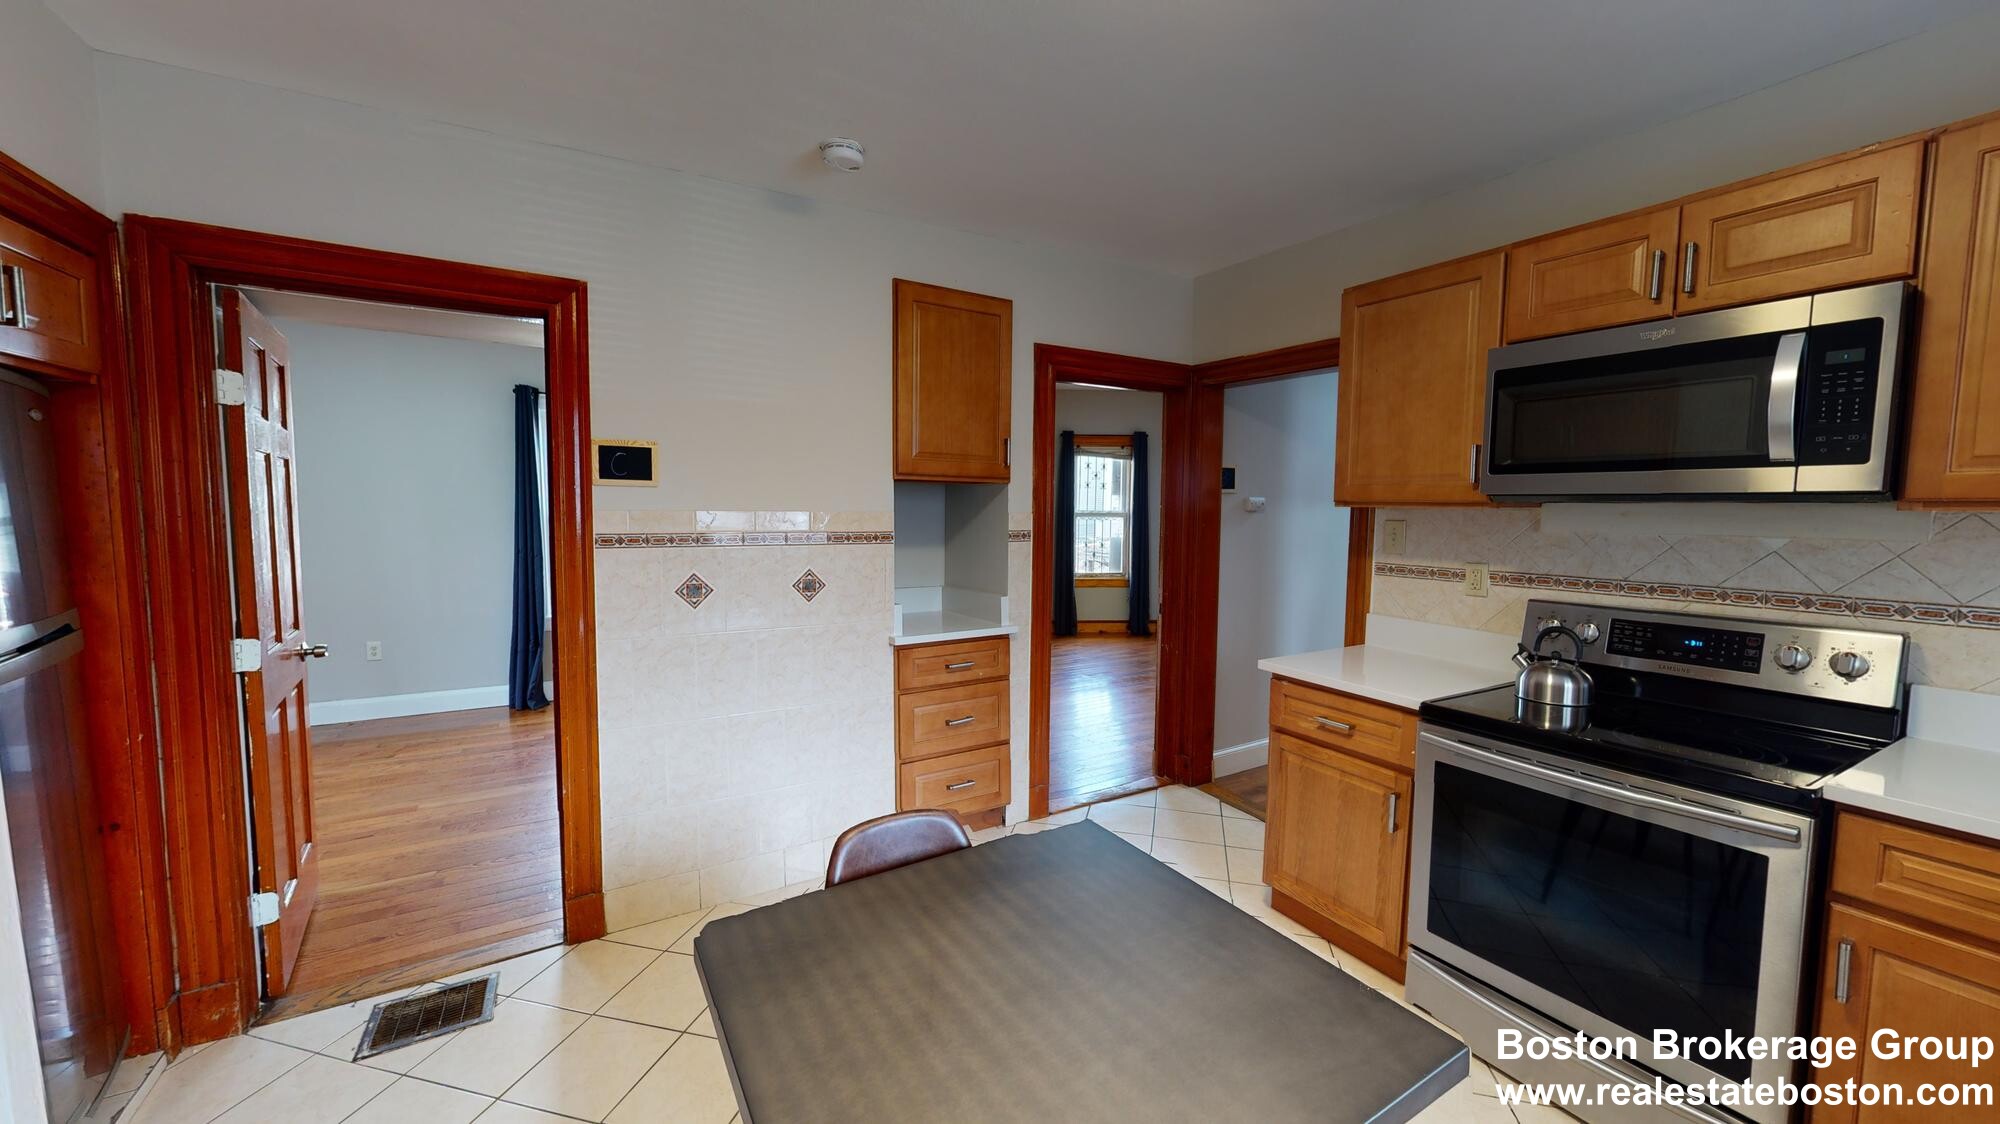 Photos of apartment on Sudan,Boston MA 02125